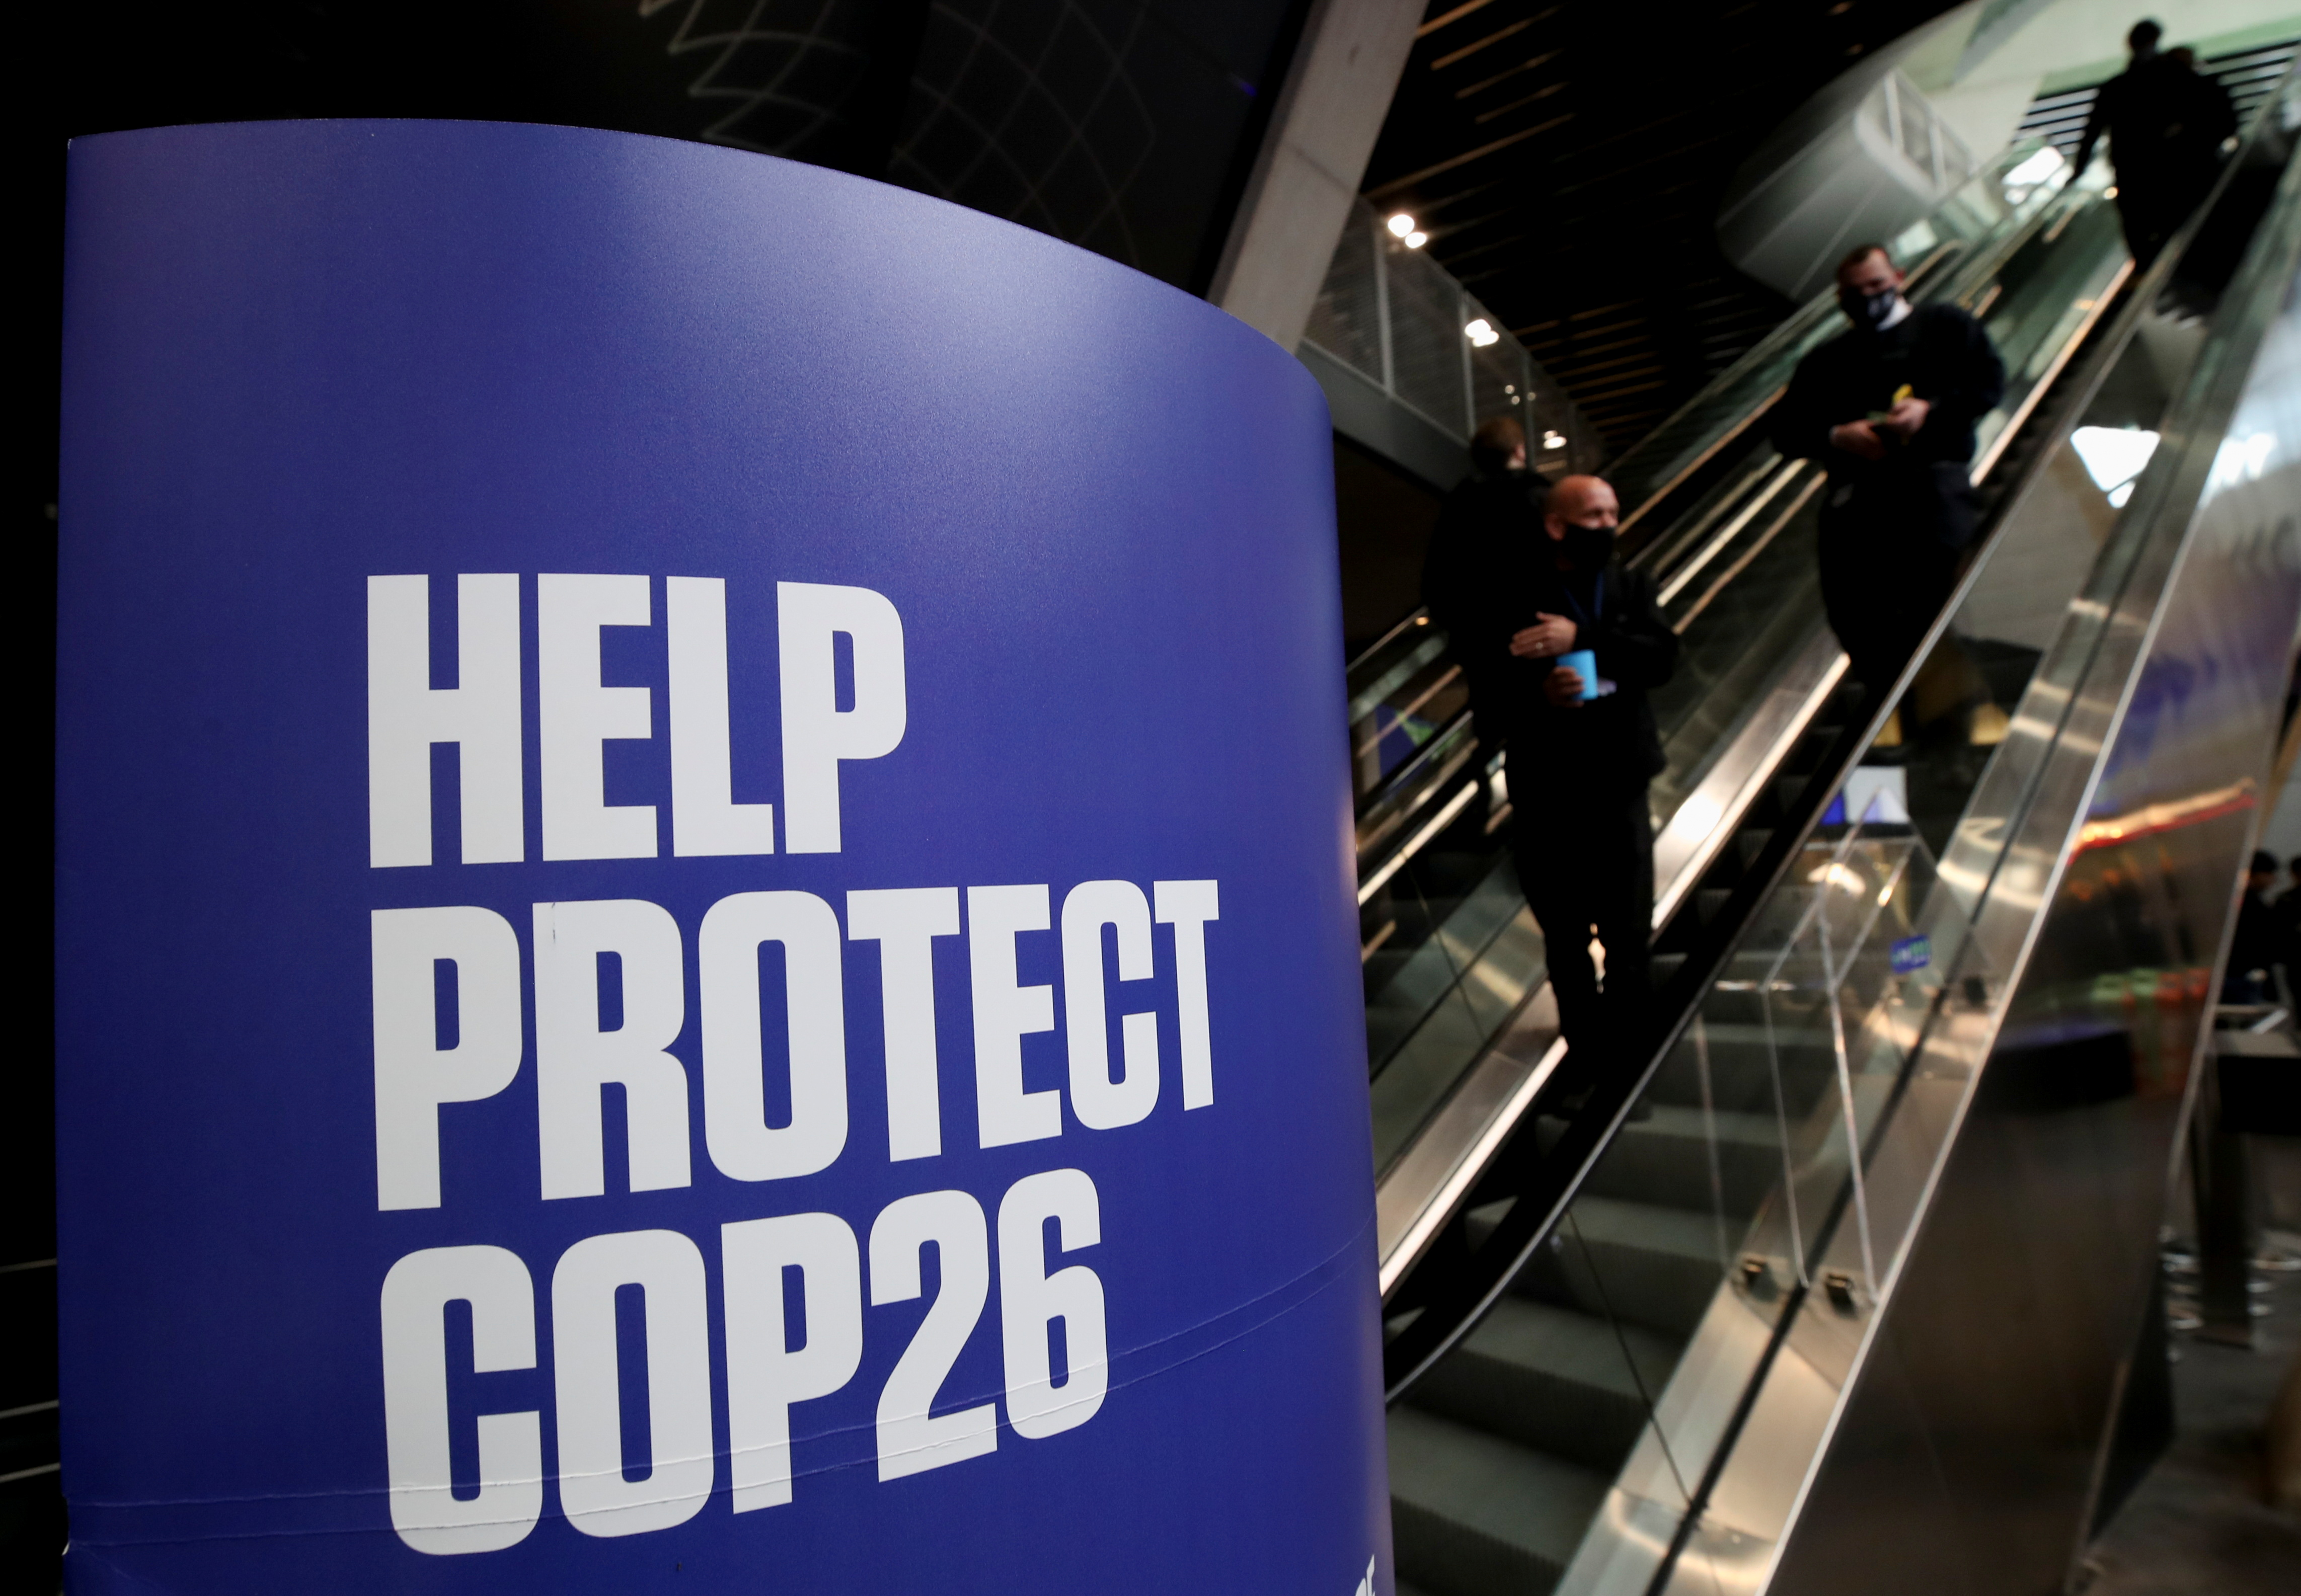 UN Climate Change Conference (COP 26) in Glasgow